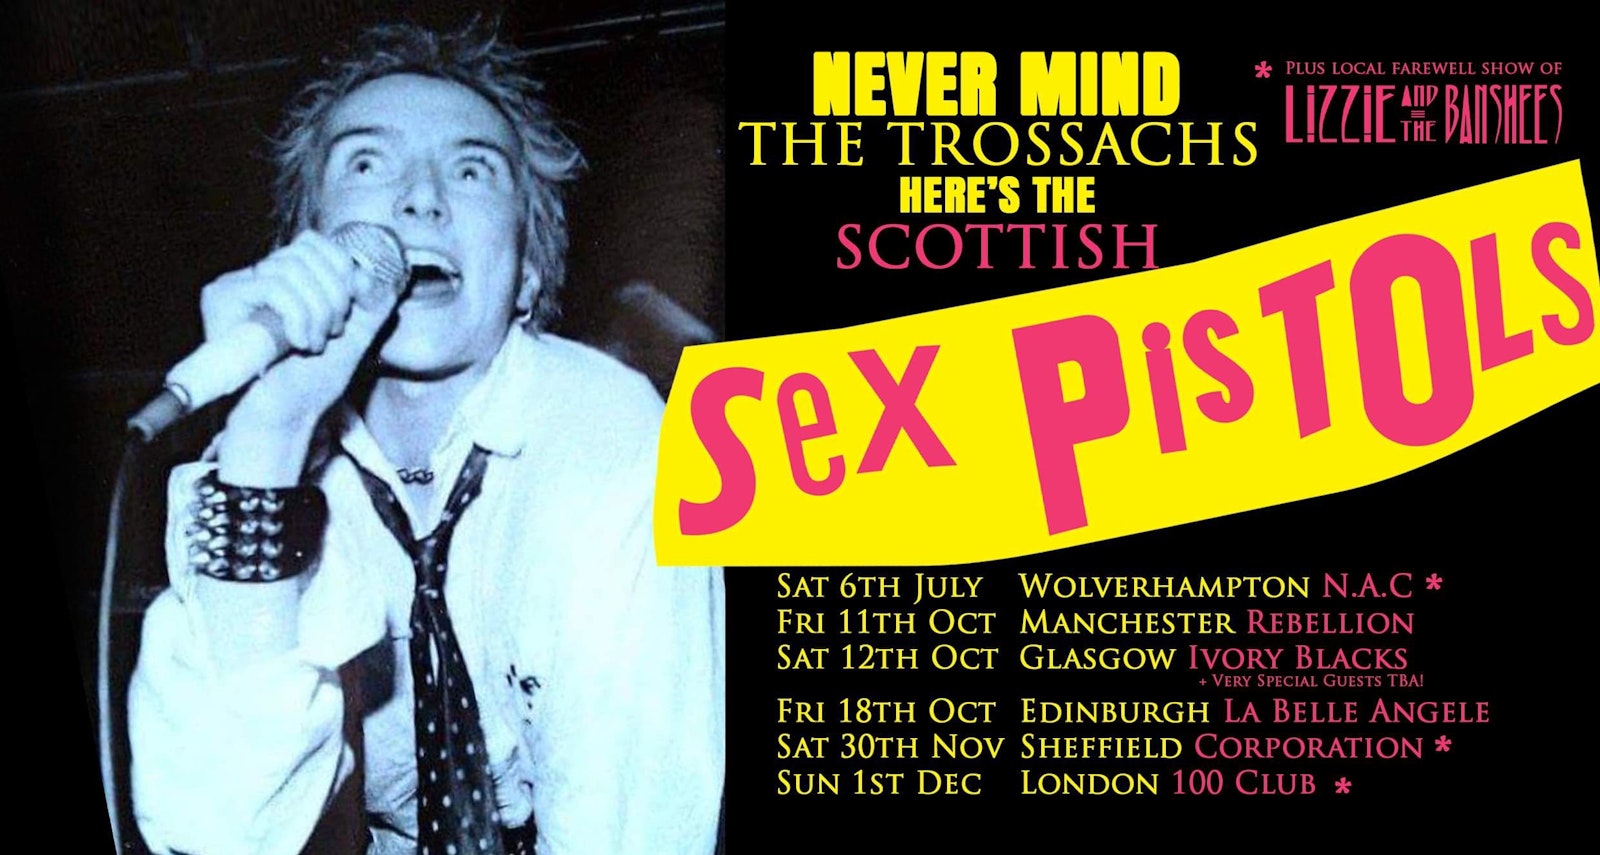 Scottish Sex Pistols